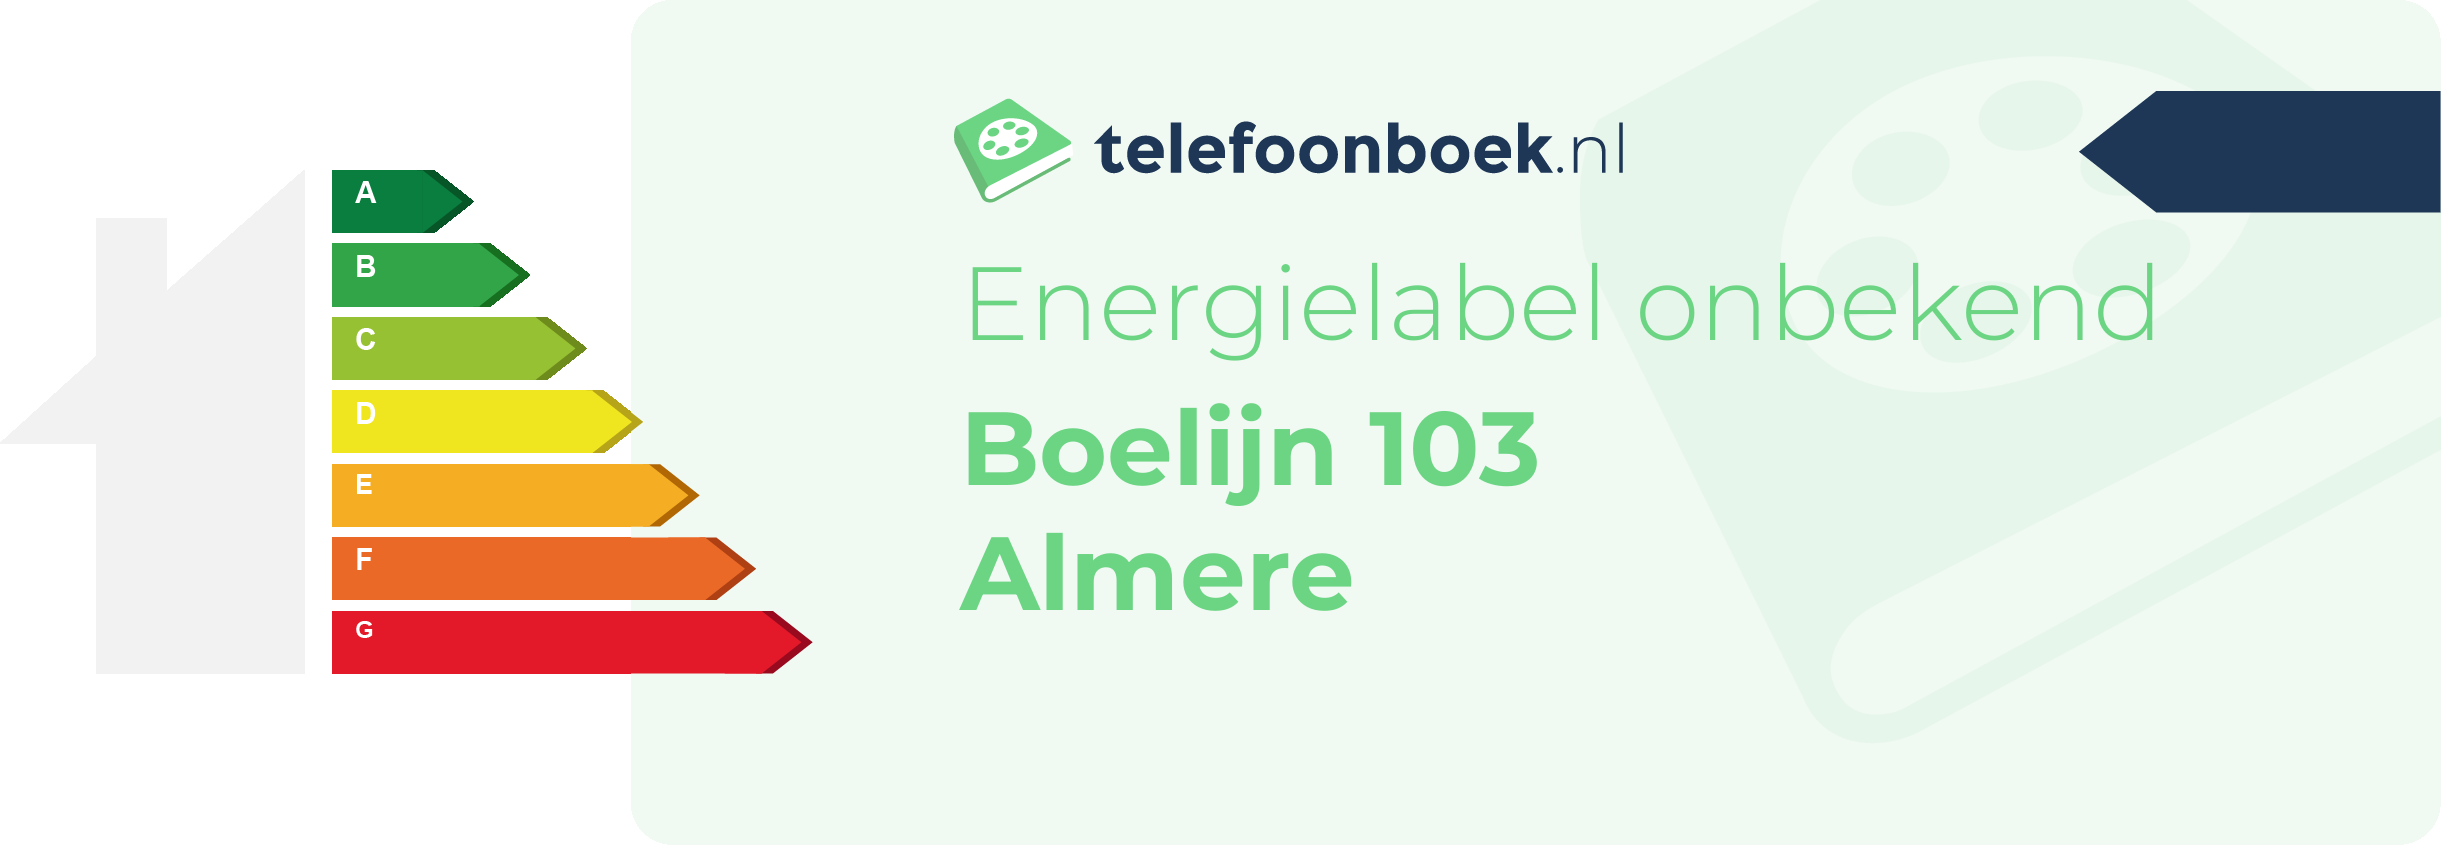 Energielabel Boelijn 103 Almere